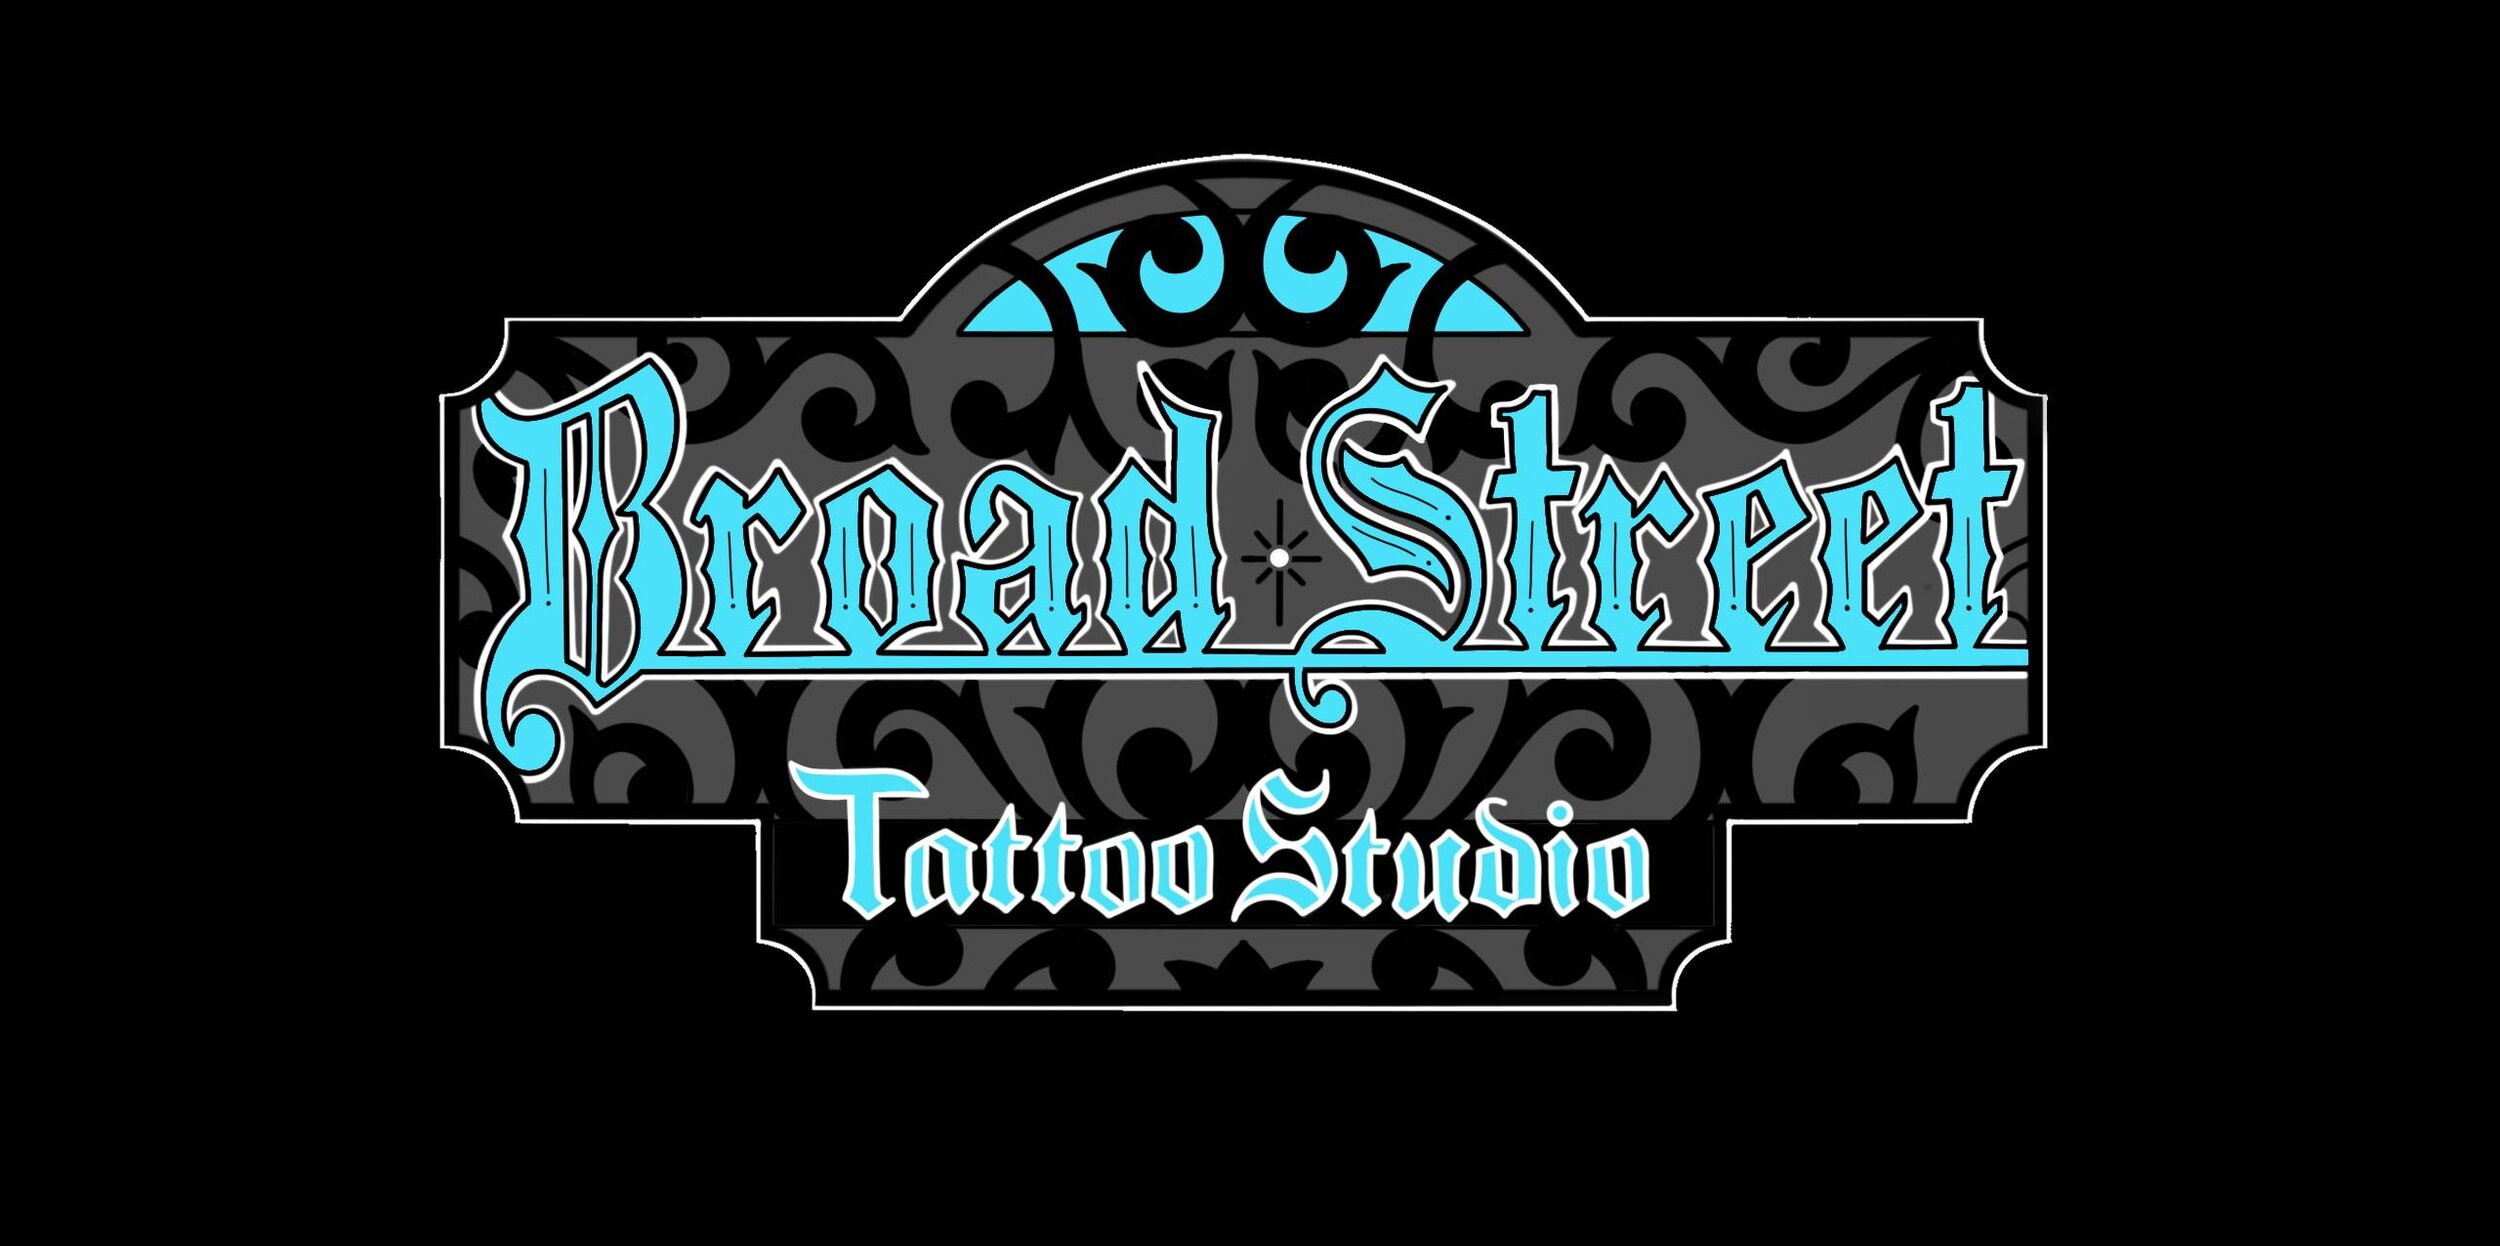 2023 Tattoo Trends, As Told by London's Best Tattoo Artists | Tattoo parlor  decor, Tattoo shop interior, Shop interior